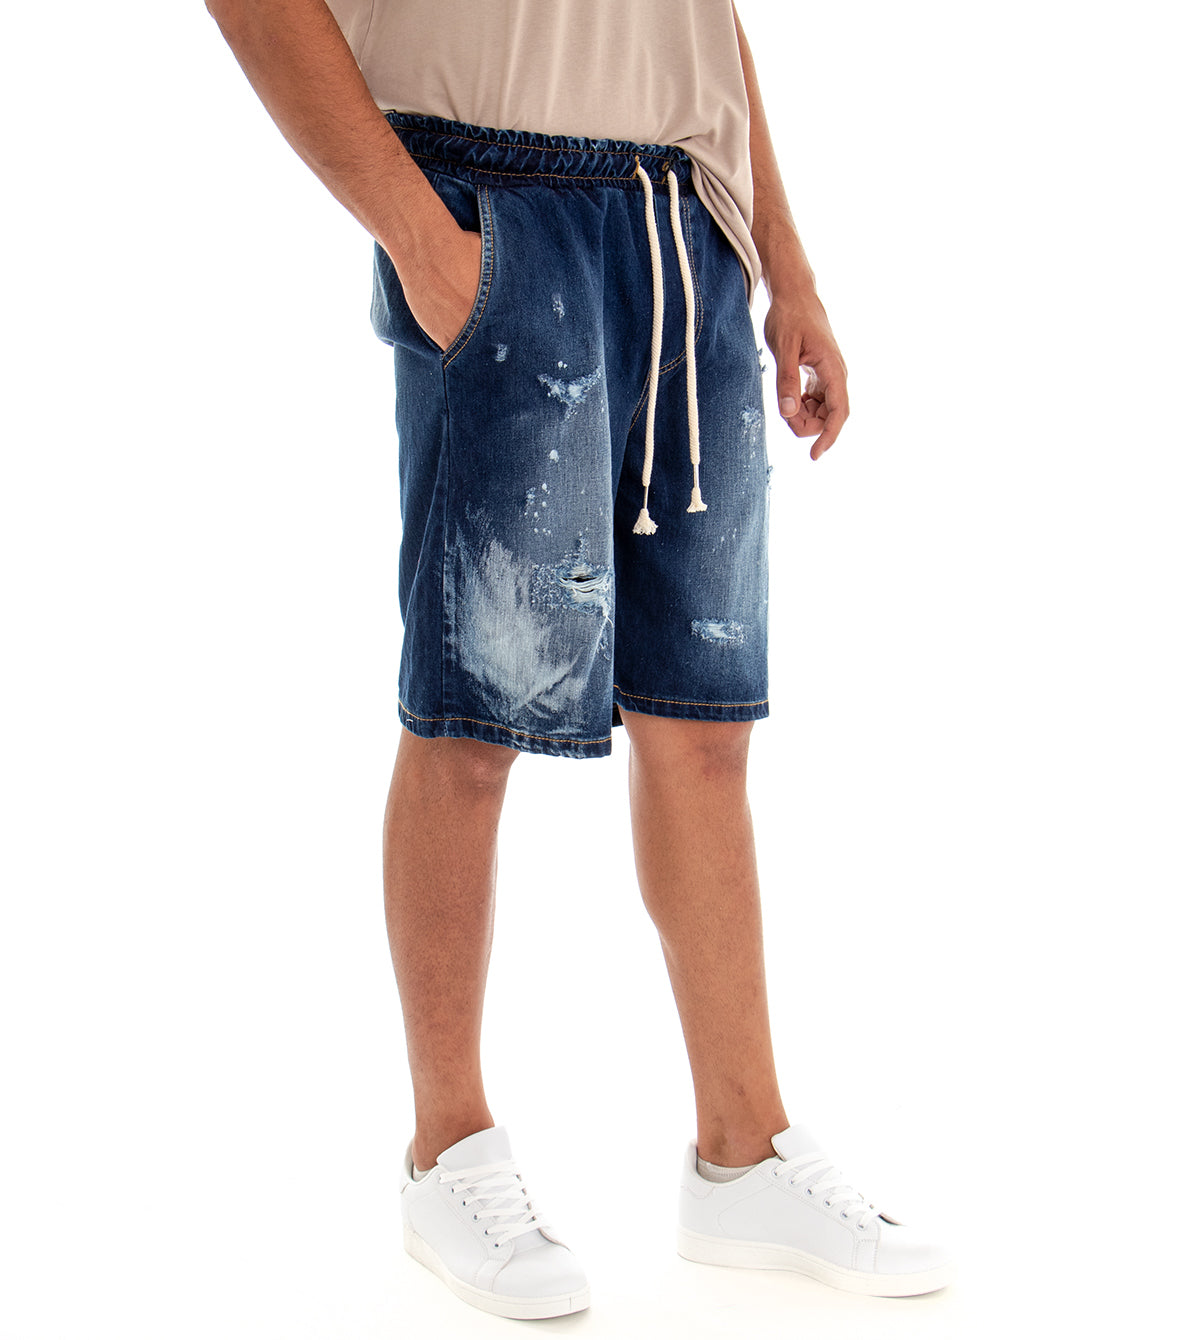 Bermuda Pantaloncino Uomo Jeans Rotture Denim con Coulisse GIOSAL-PC1565A